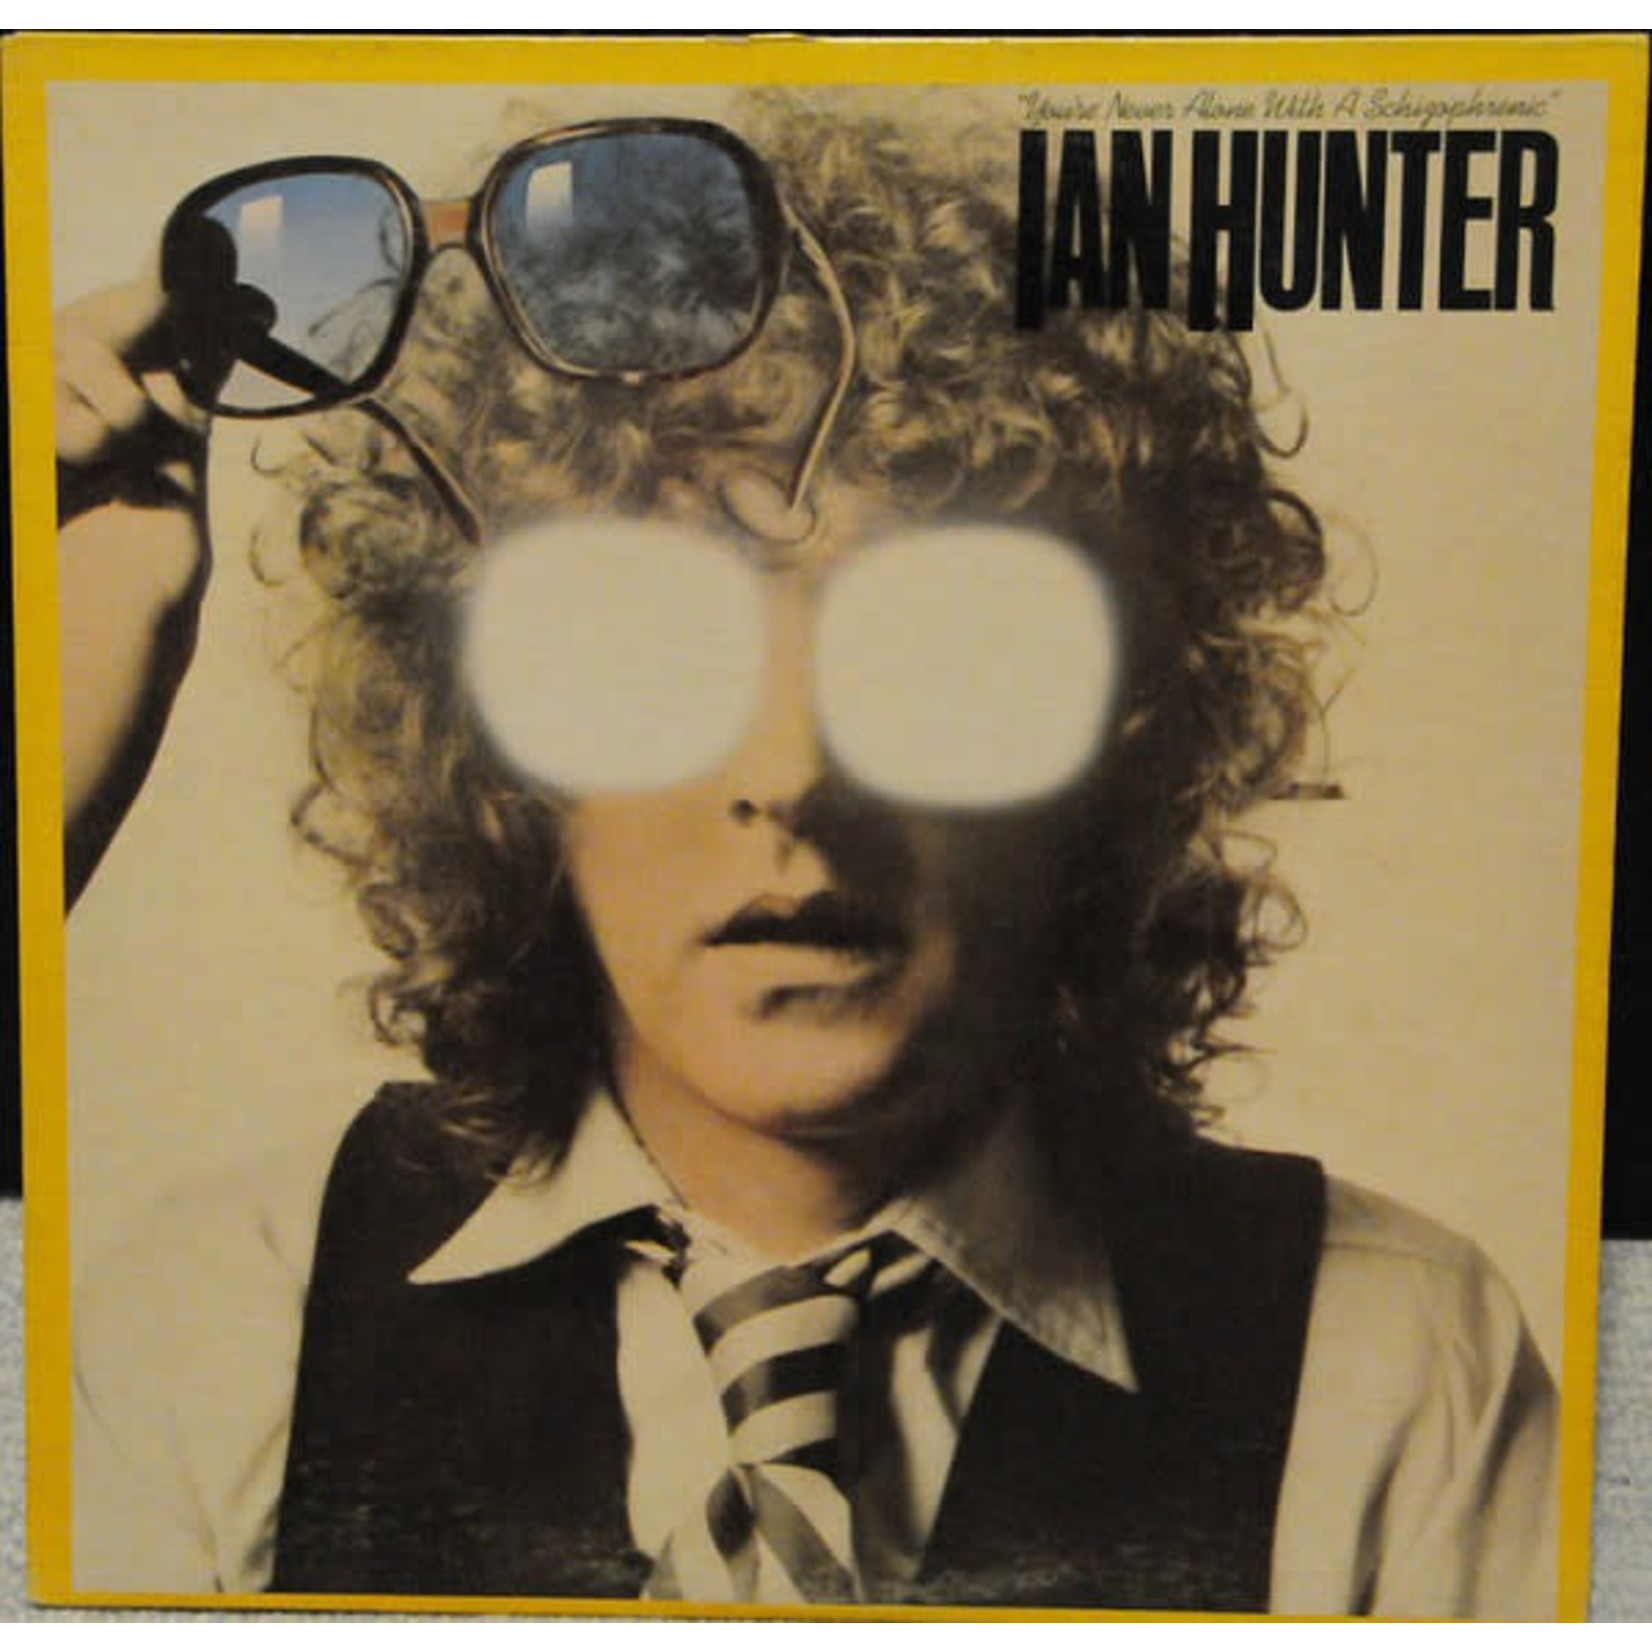 Ian Hunter Ian Hunter – You're Never Alone With A Schizophrenic (VG, 1979, LP, Chrysalis – CHM 41214, Canada)